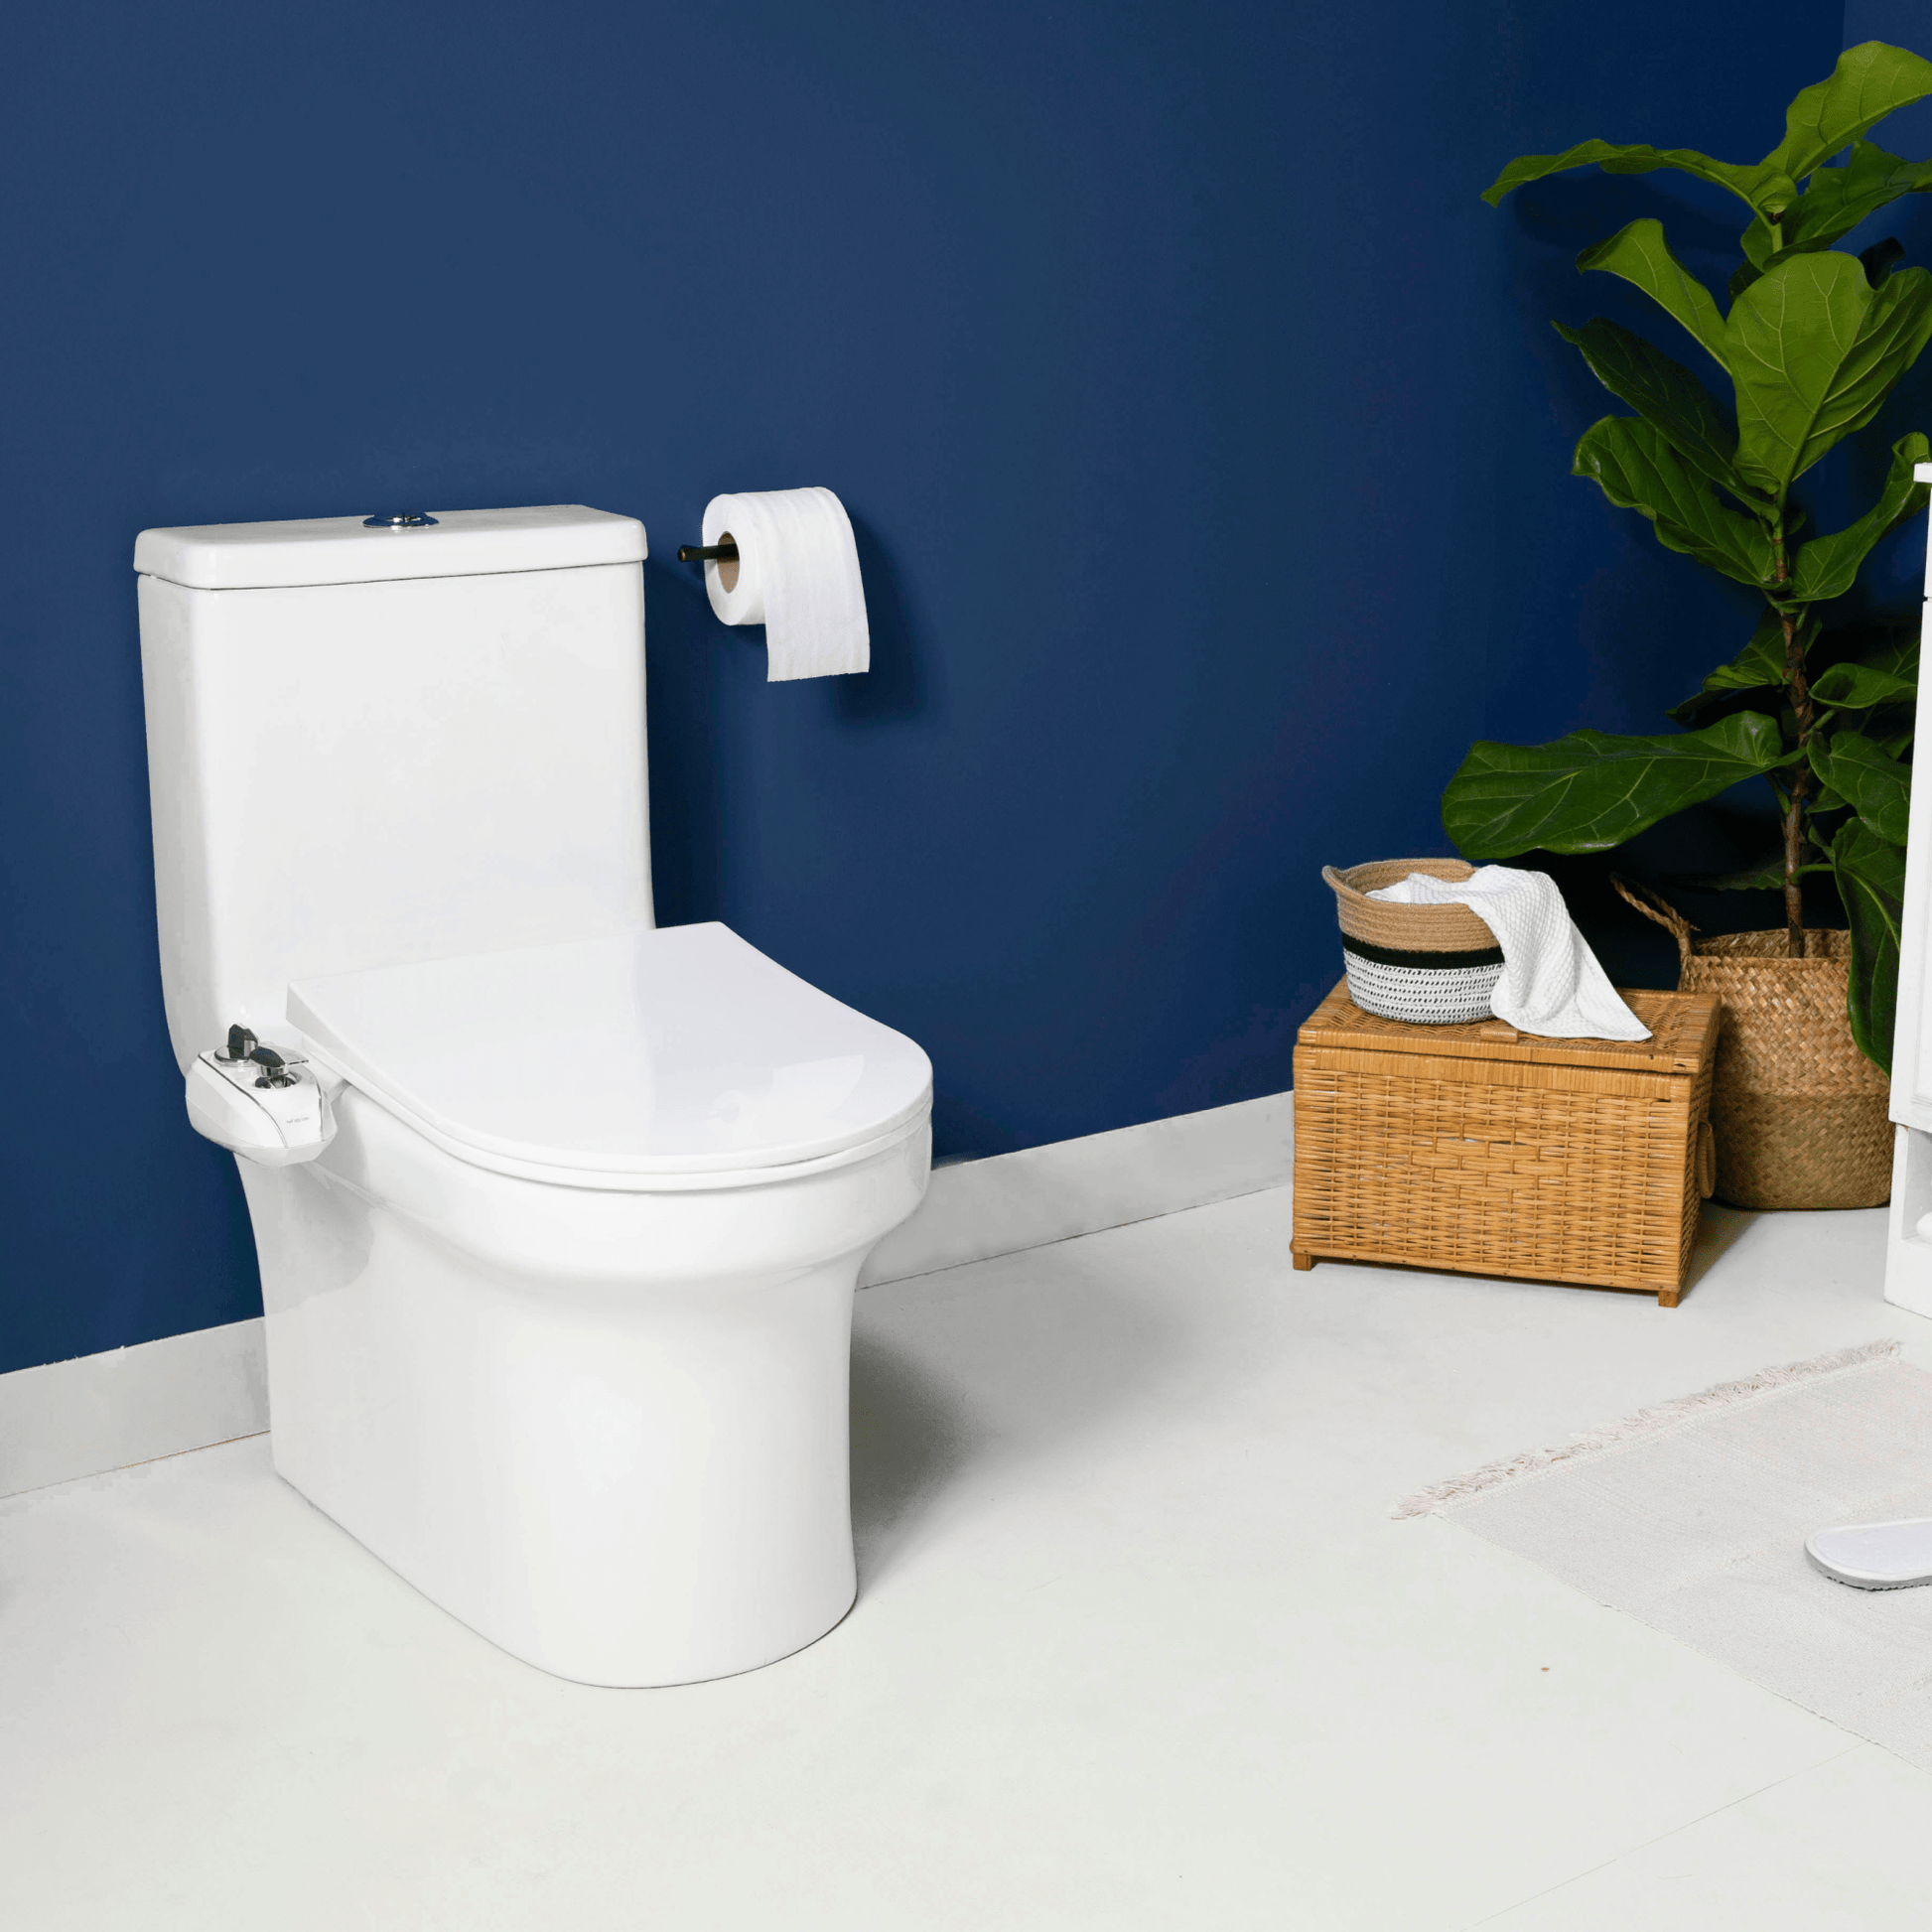 NEO 320 Plus Chrome elevates your bathroom to a modern style